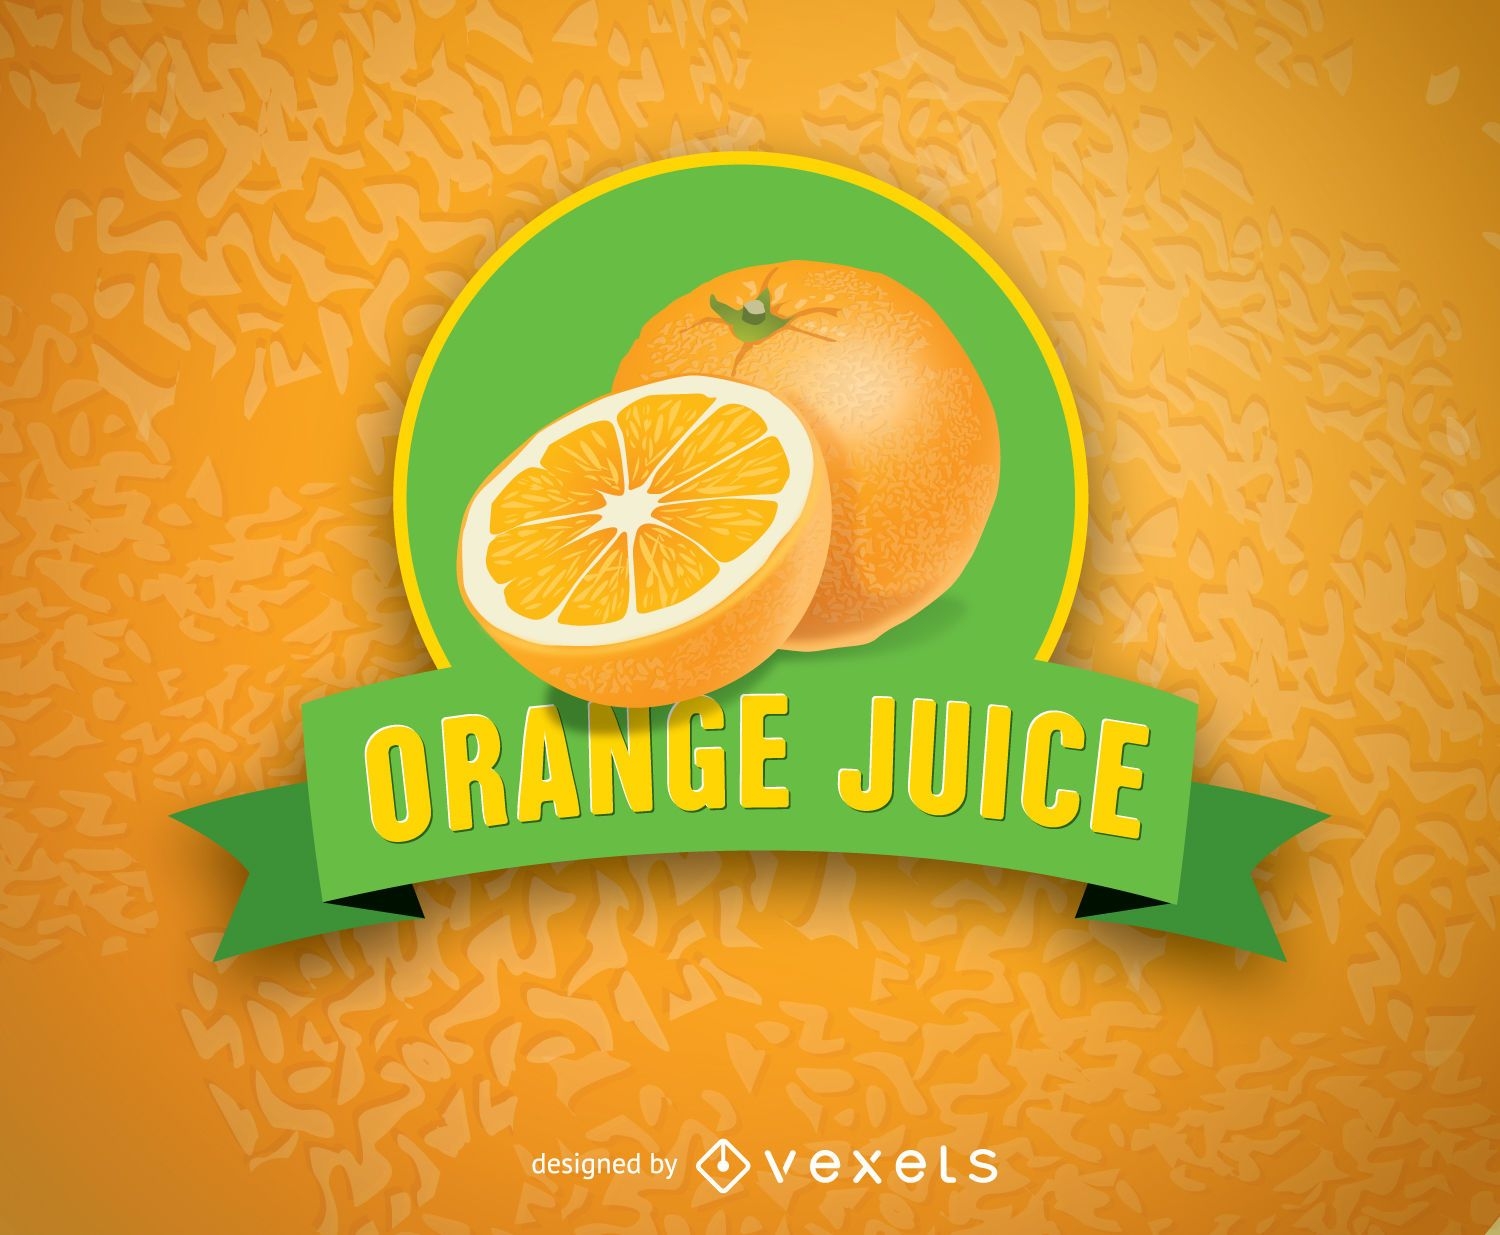 Juice Logo Design Concept. Fruit and Juice Icon Theme Stock Illustration -  Illustration of juicy, icon: 174138474